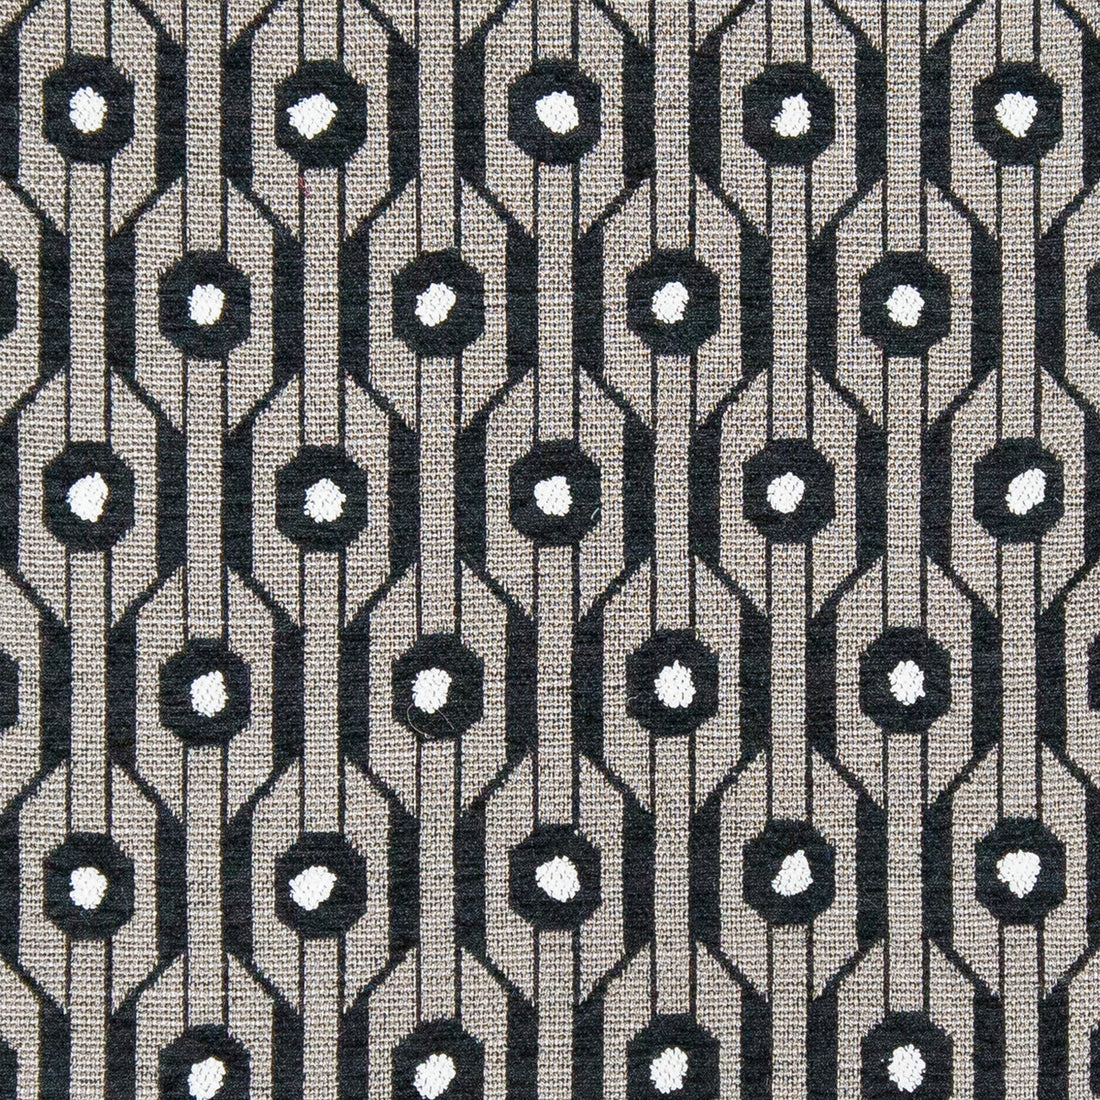 Almirante fabric in topo color - pattern GDT5576.002.0 - by Gaston y Daniela in the Gaston Nuevo Mundo collection